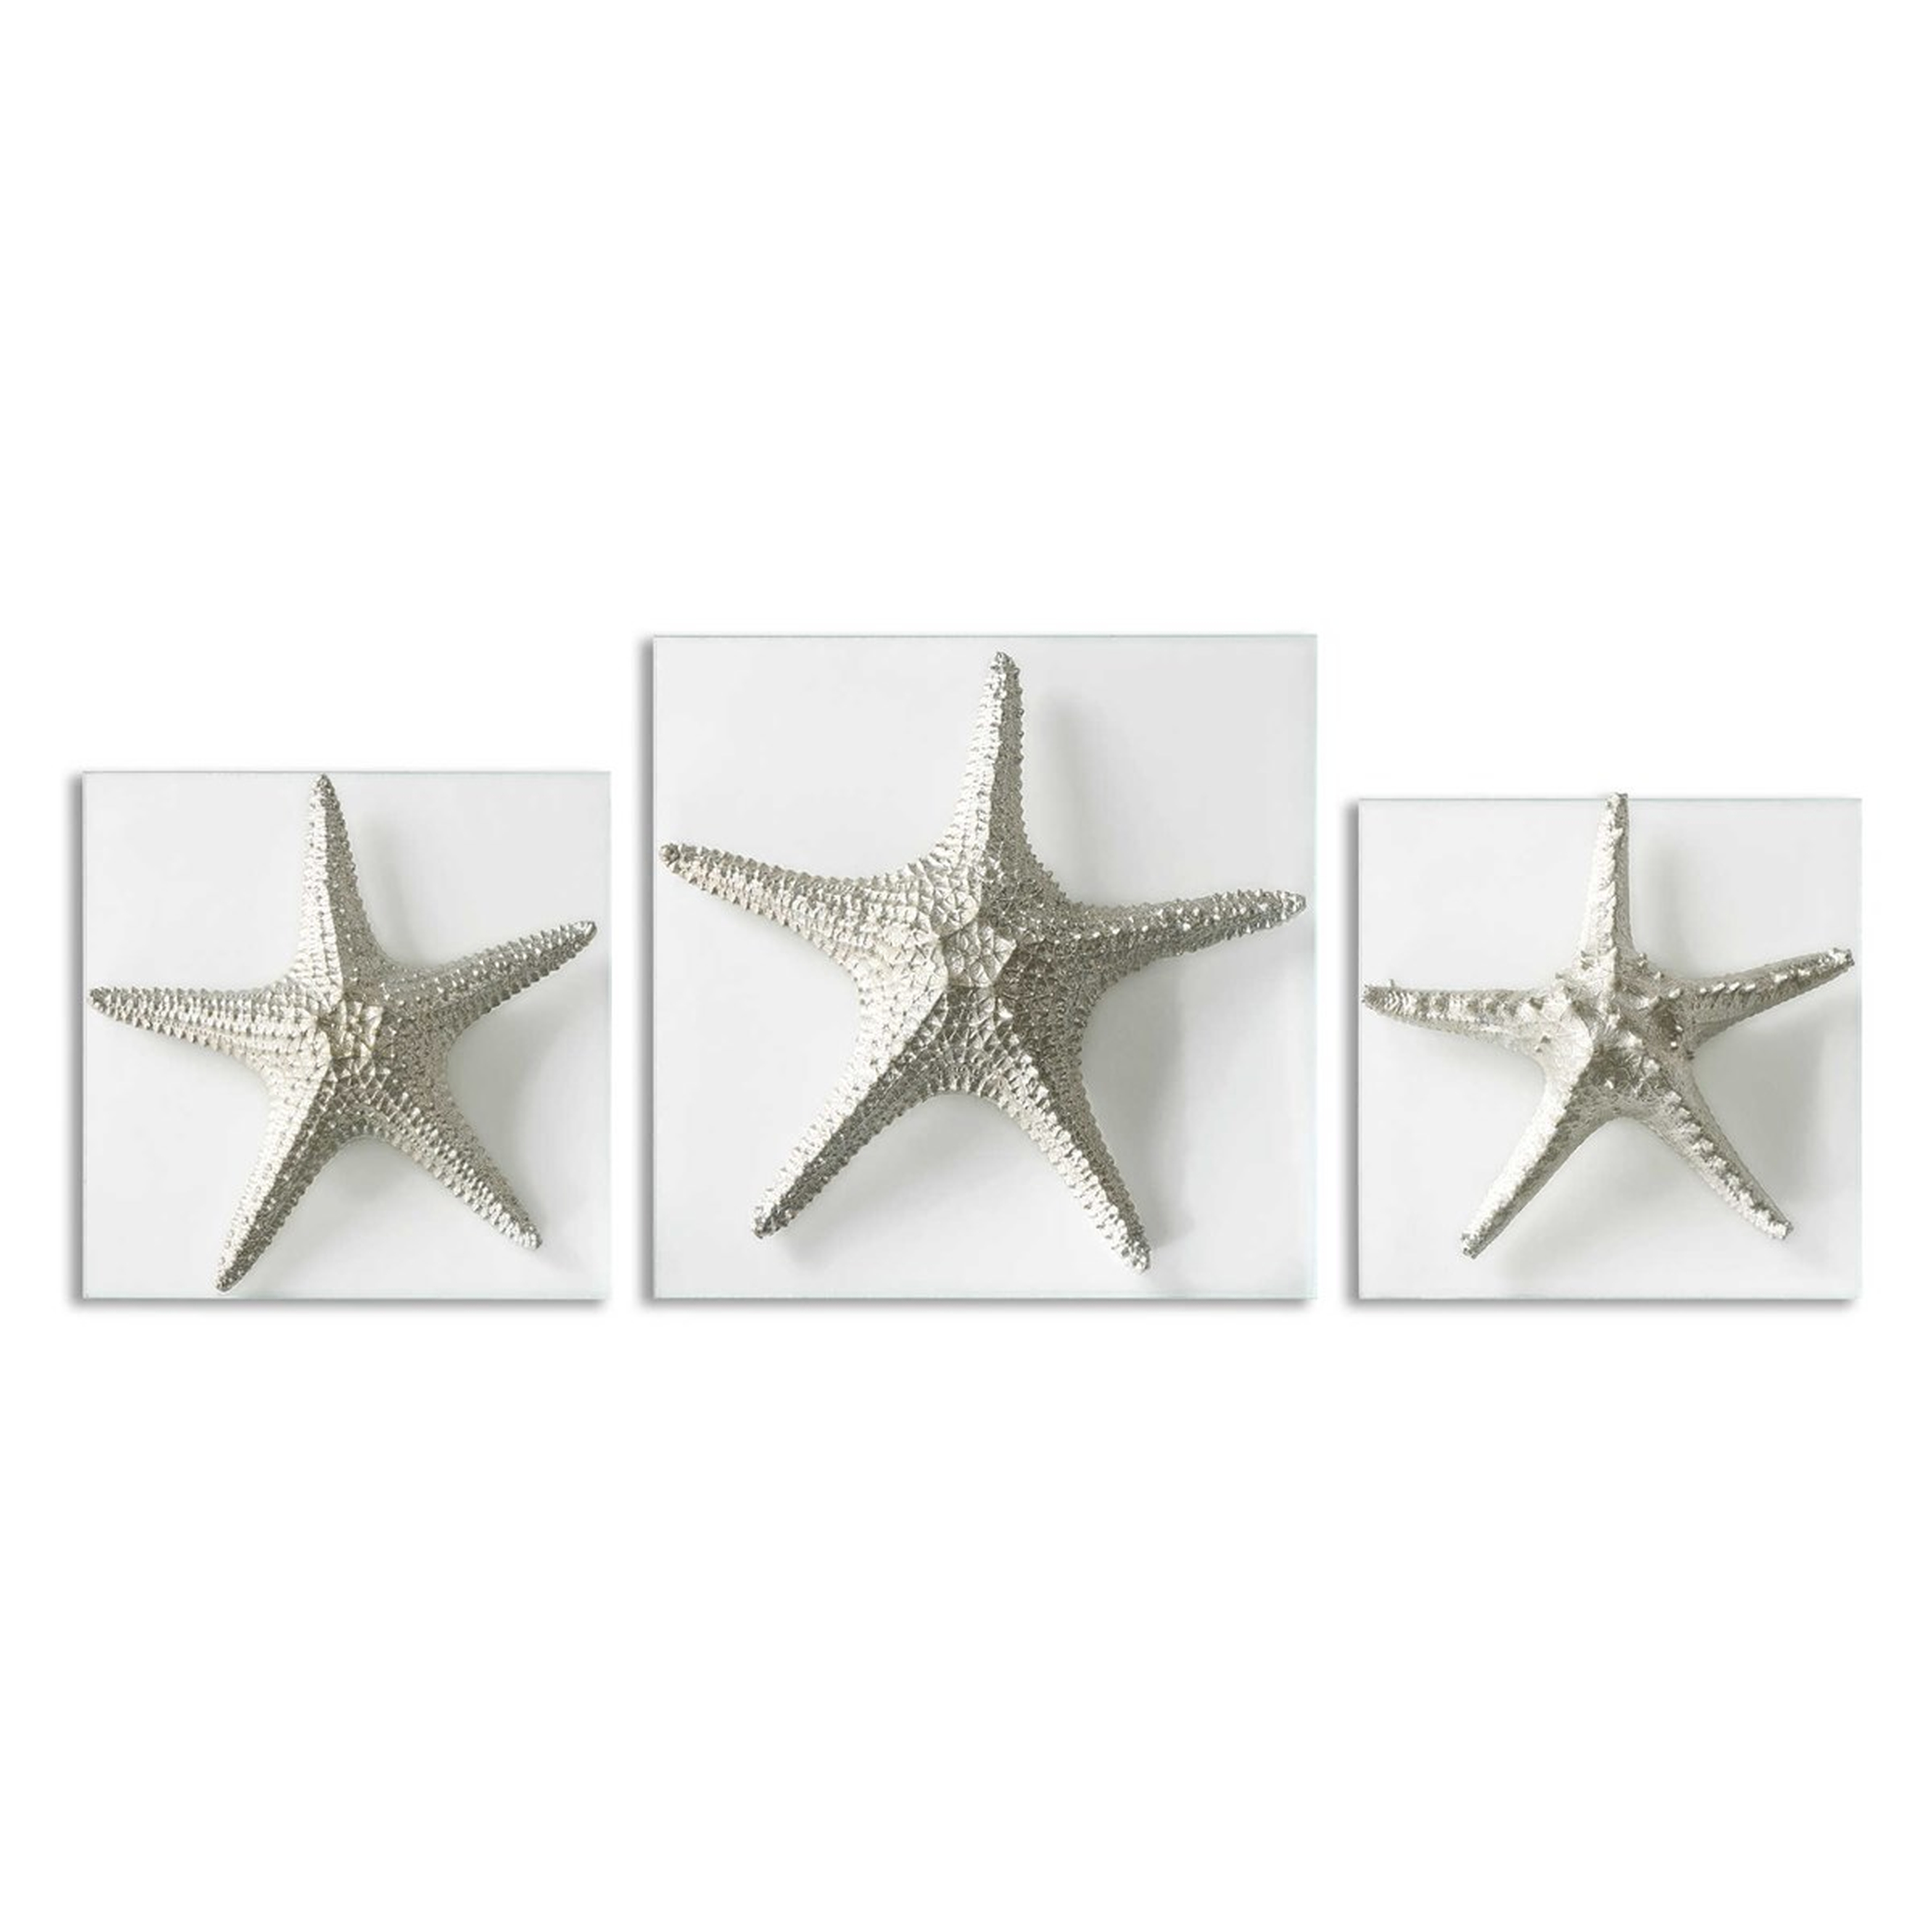 NEXT » Silver Starfish, S/3 - Hudsonhill Foundry